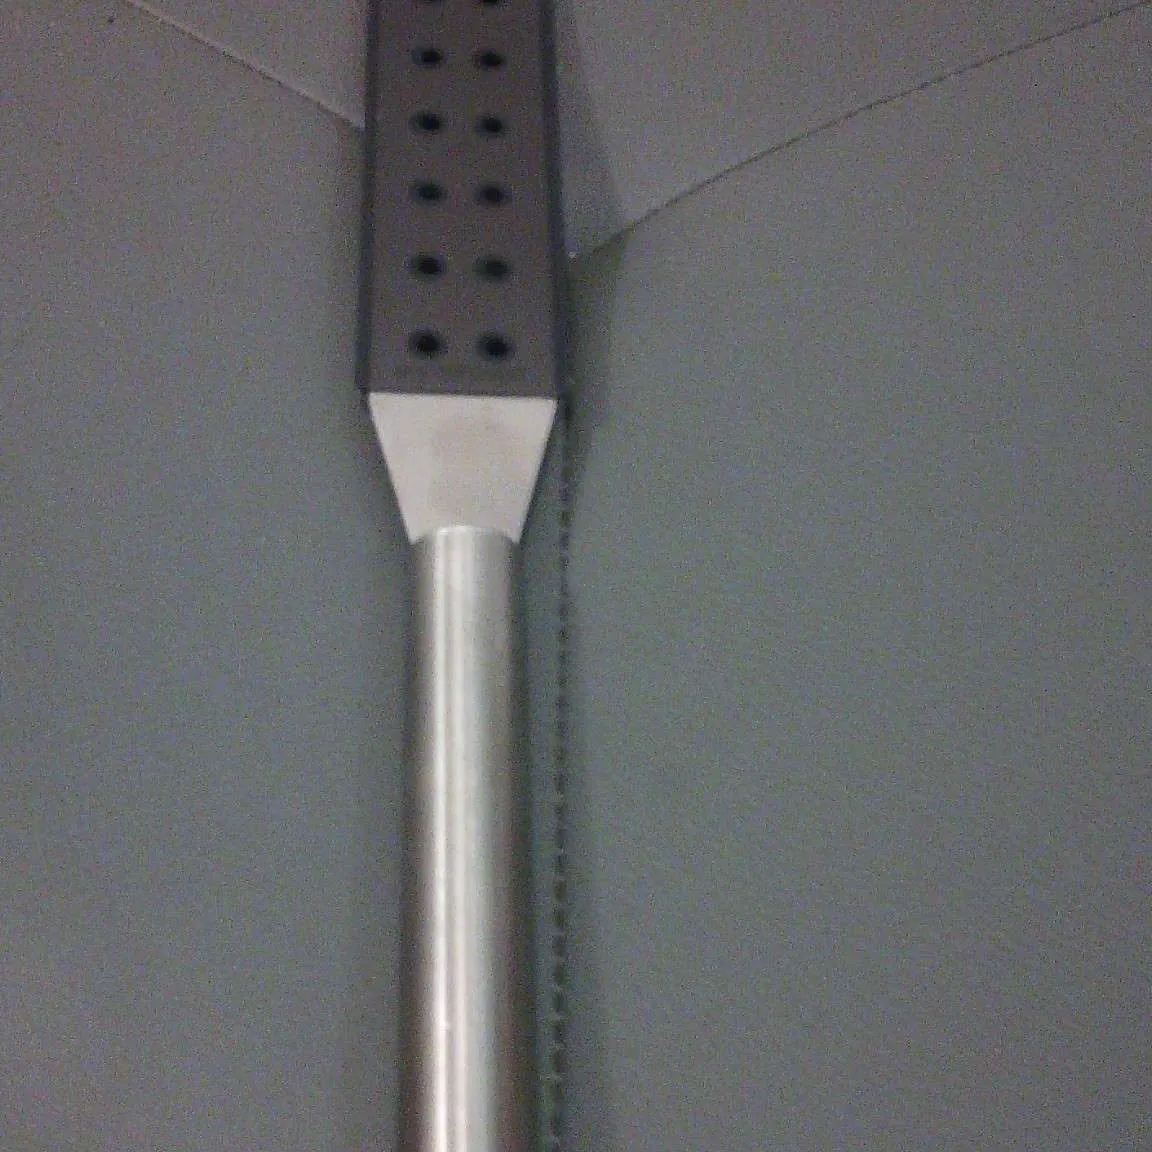 IKEA utensil/turner photo 1